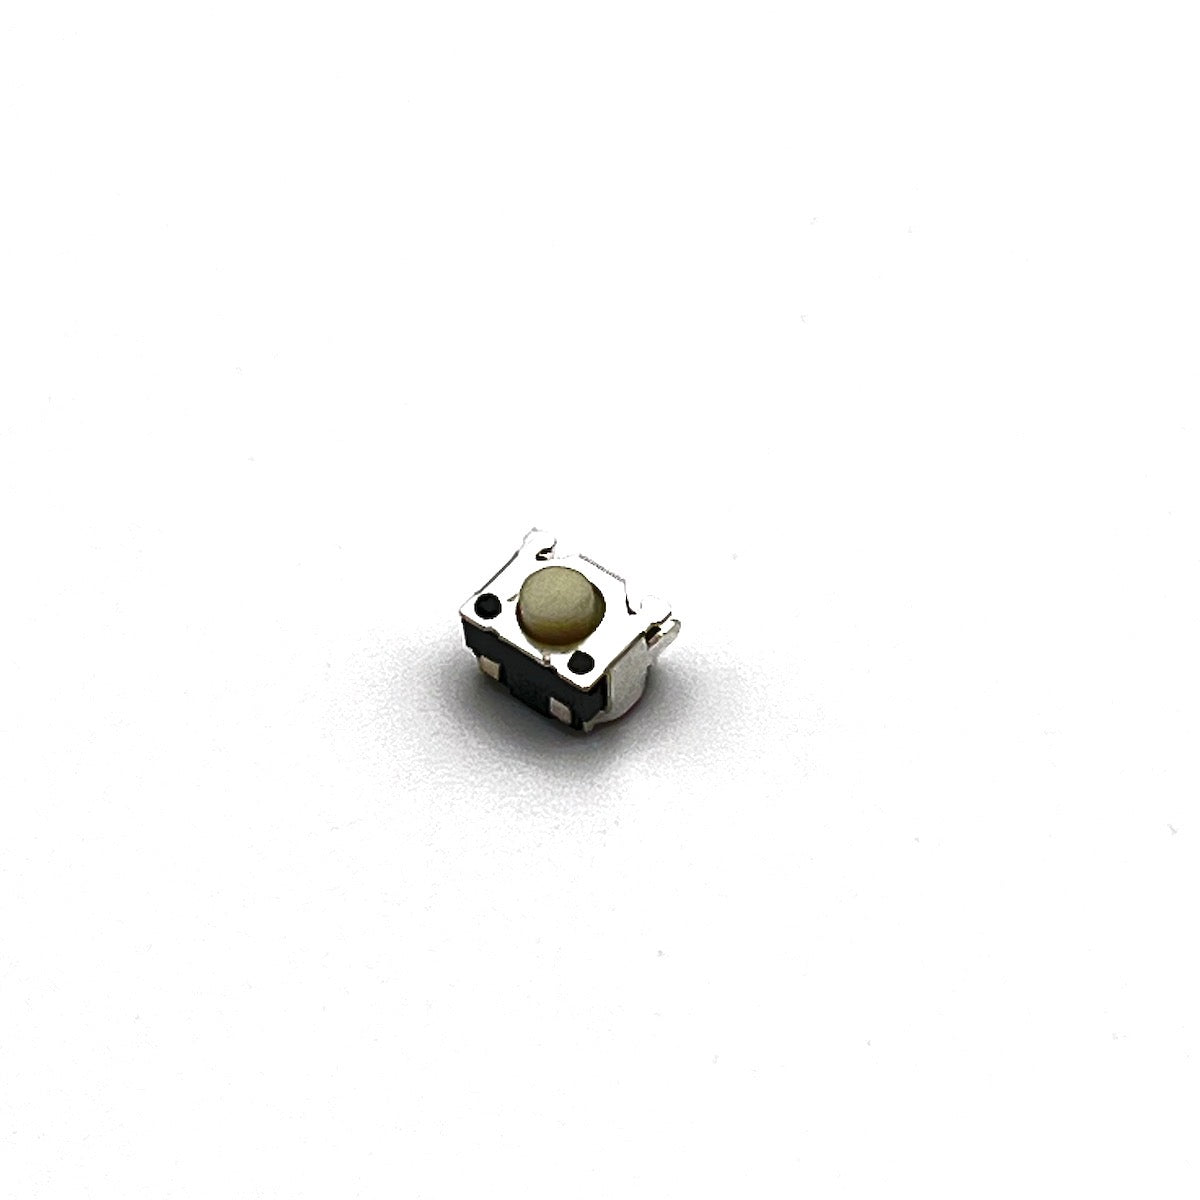 New Button power for Garmin Alpha 100 (power) genuine part repair